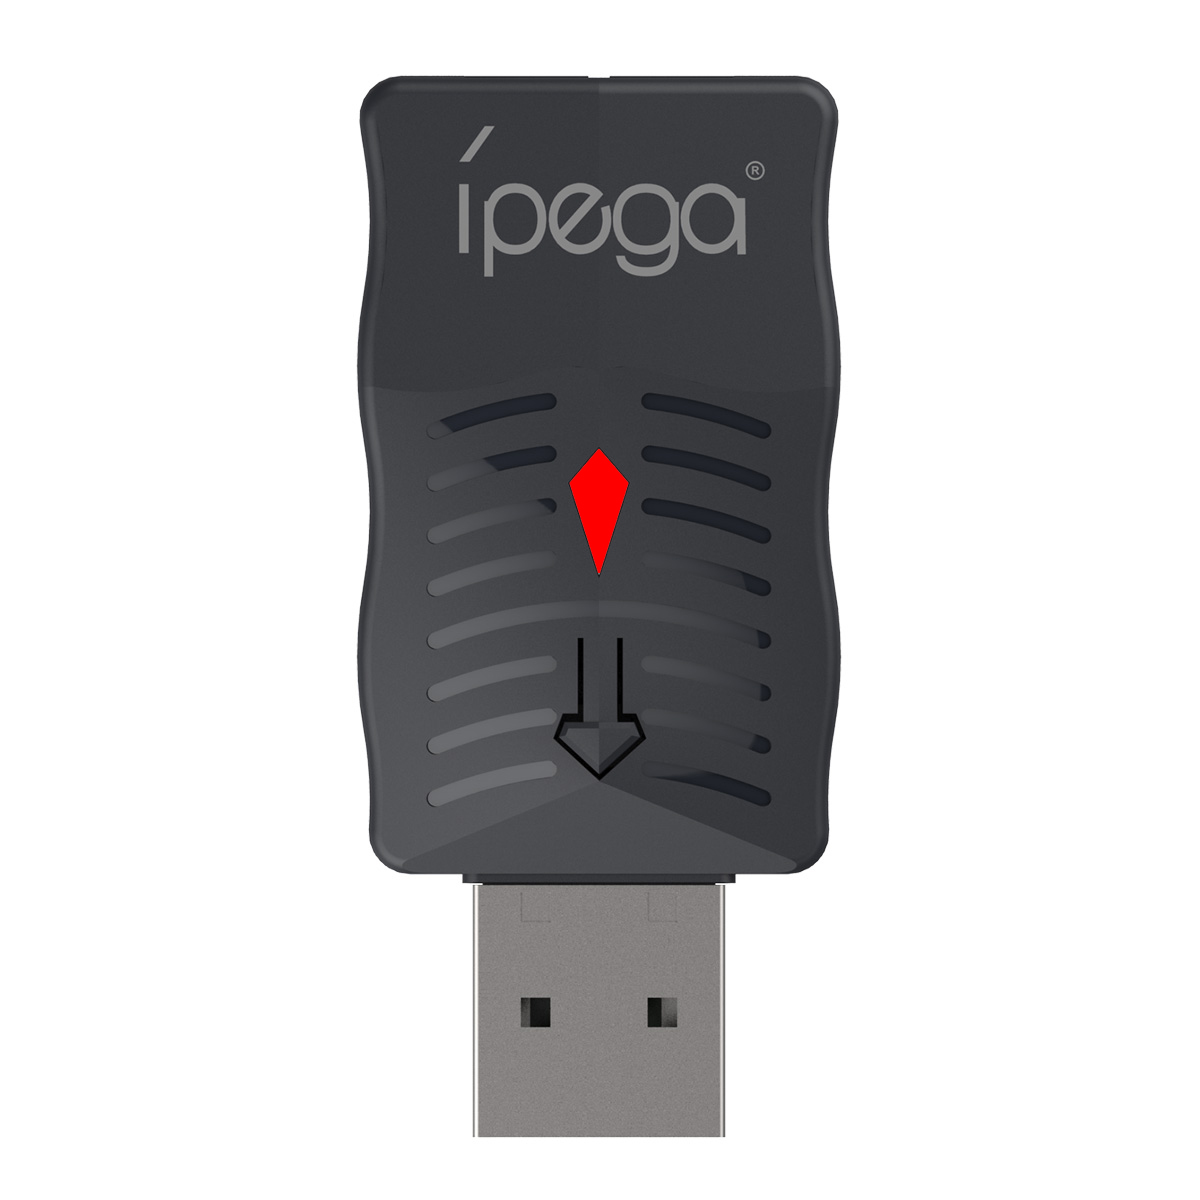 Ipega-9223 Android phone activator